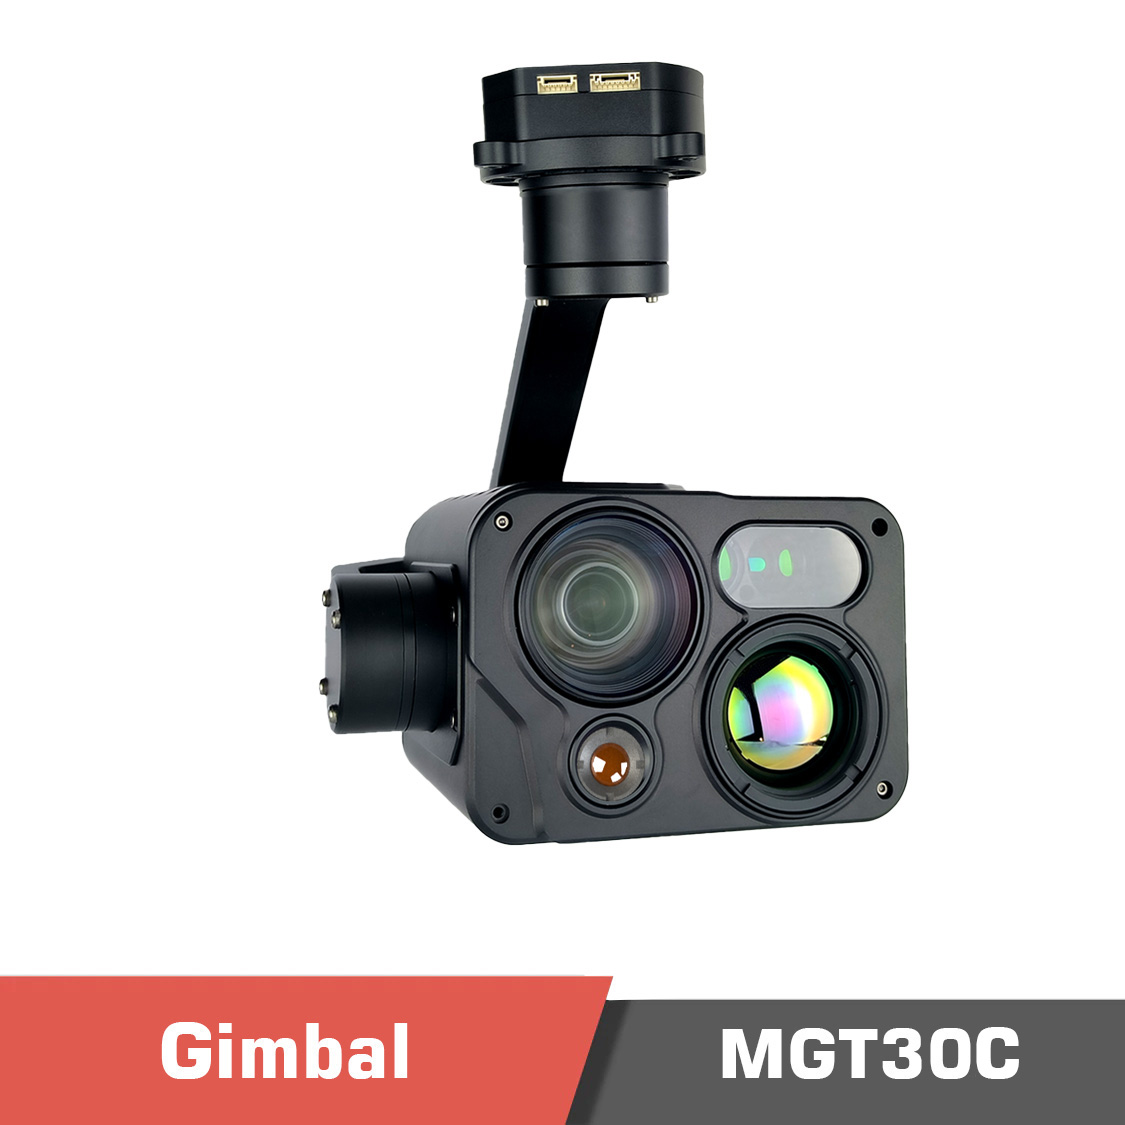 MGT30C temp2 - MGT30A Gimbal Camera,Ethernet,Laser range finder,30X Optical Zoom,Professional 3-axis High-precise FOC Program,HDMI,3-Axis Stabilizer,Lightweight Gimbal Camera,UAV UGV USV RC Planes,Small Gimbal Camera,S.Bus / UART / UDP Control Signal Input Ports,S.Bus Control Signal Output Port,AI Smart Identify Tracking,High-precise FOC Program - MotioNew - 2